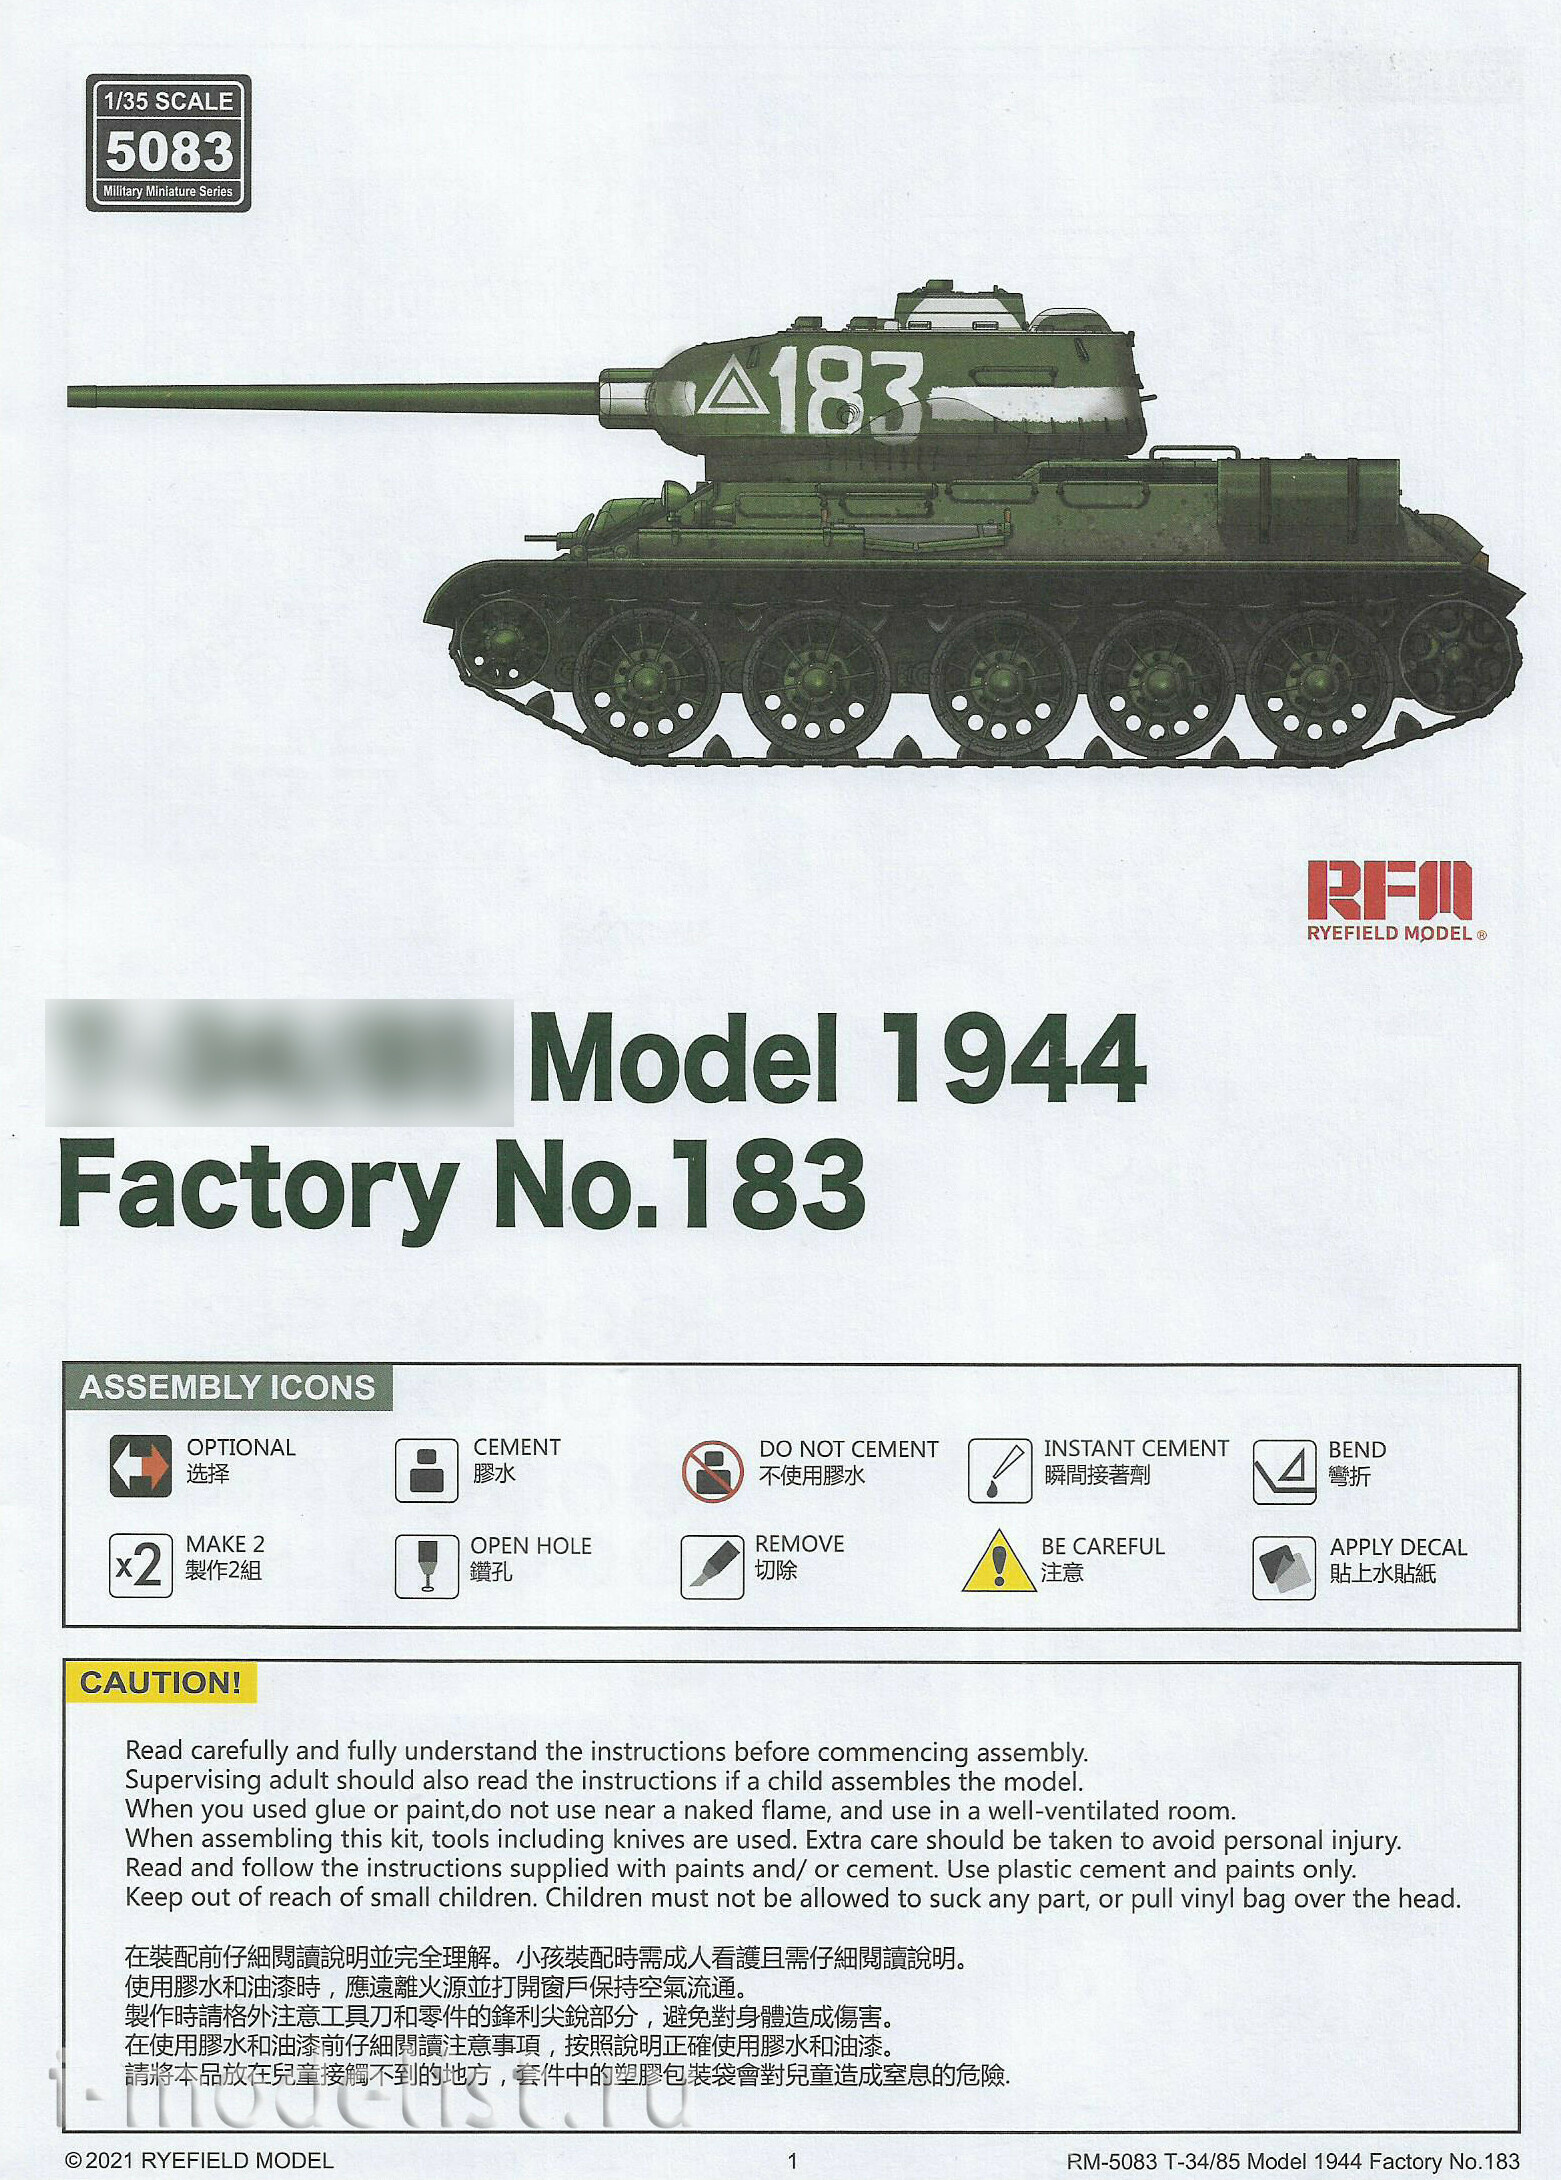 RM-5083 Rye Field Models 1/35 Танк 34/85, выпуск 1944 Factory No. 183